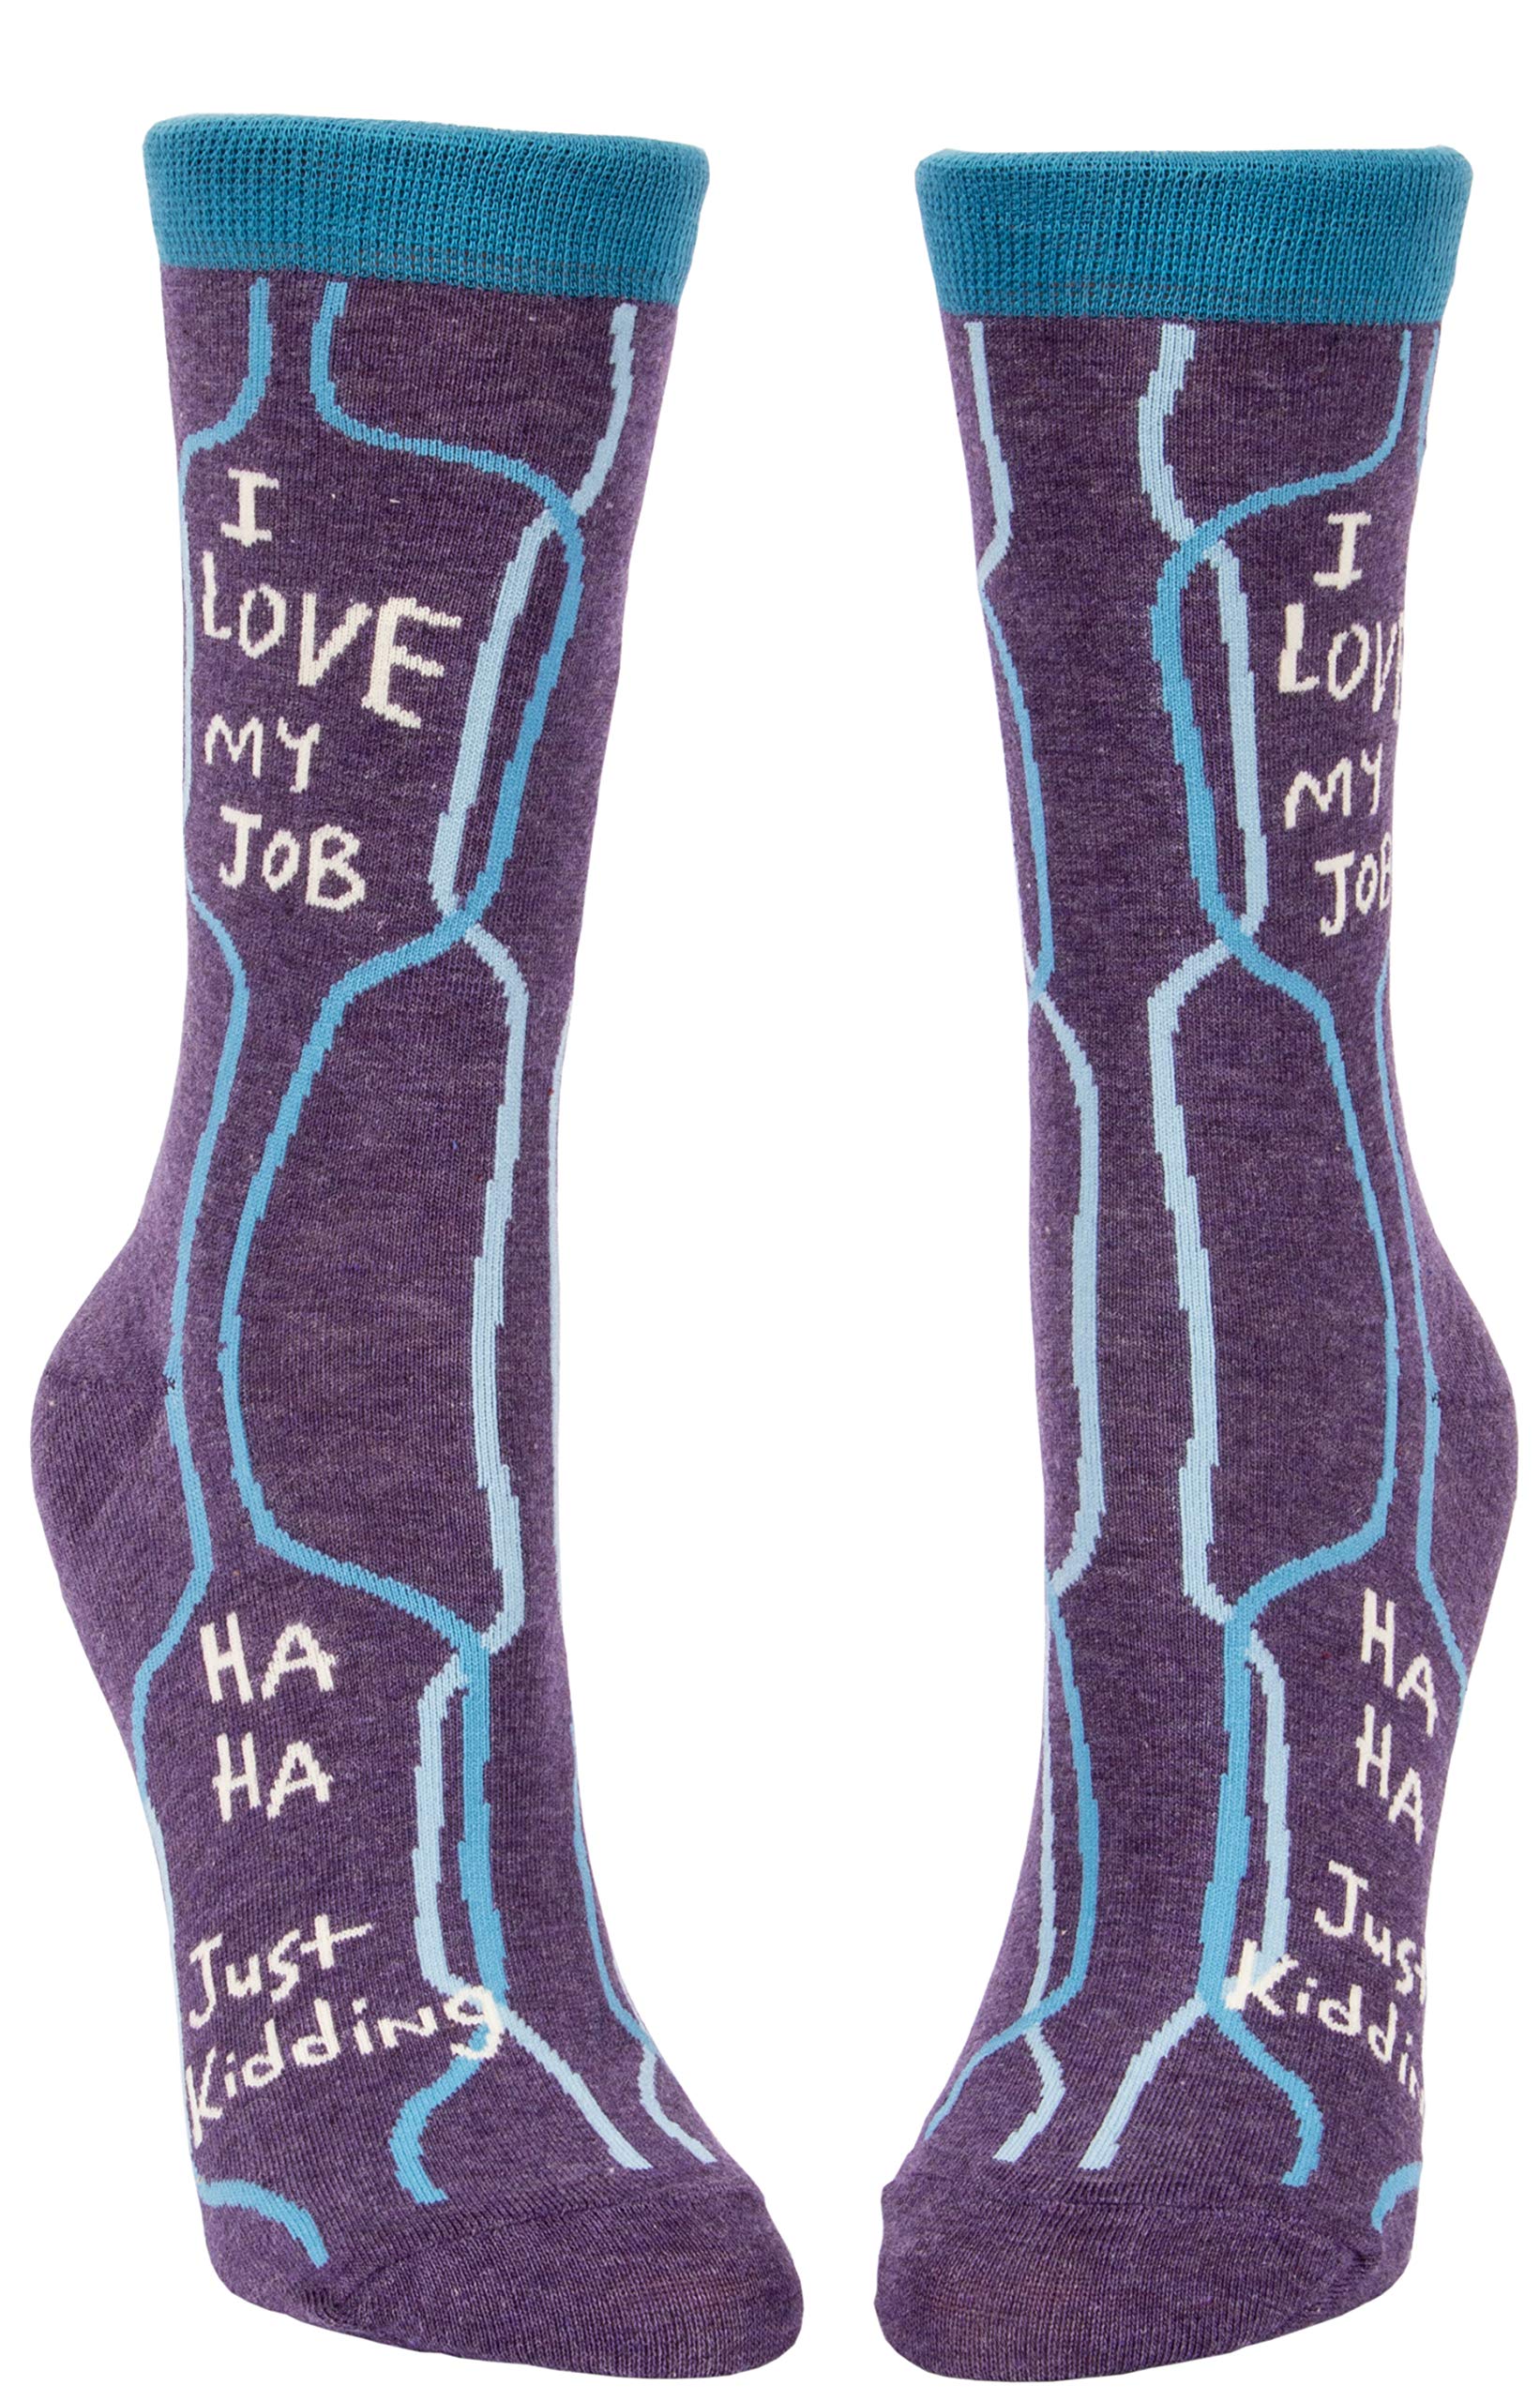 Blue Q Women's Funny Crew Socks - I Love My Job. Ha Ha Just Kidding! (fit shoe size 5-10)